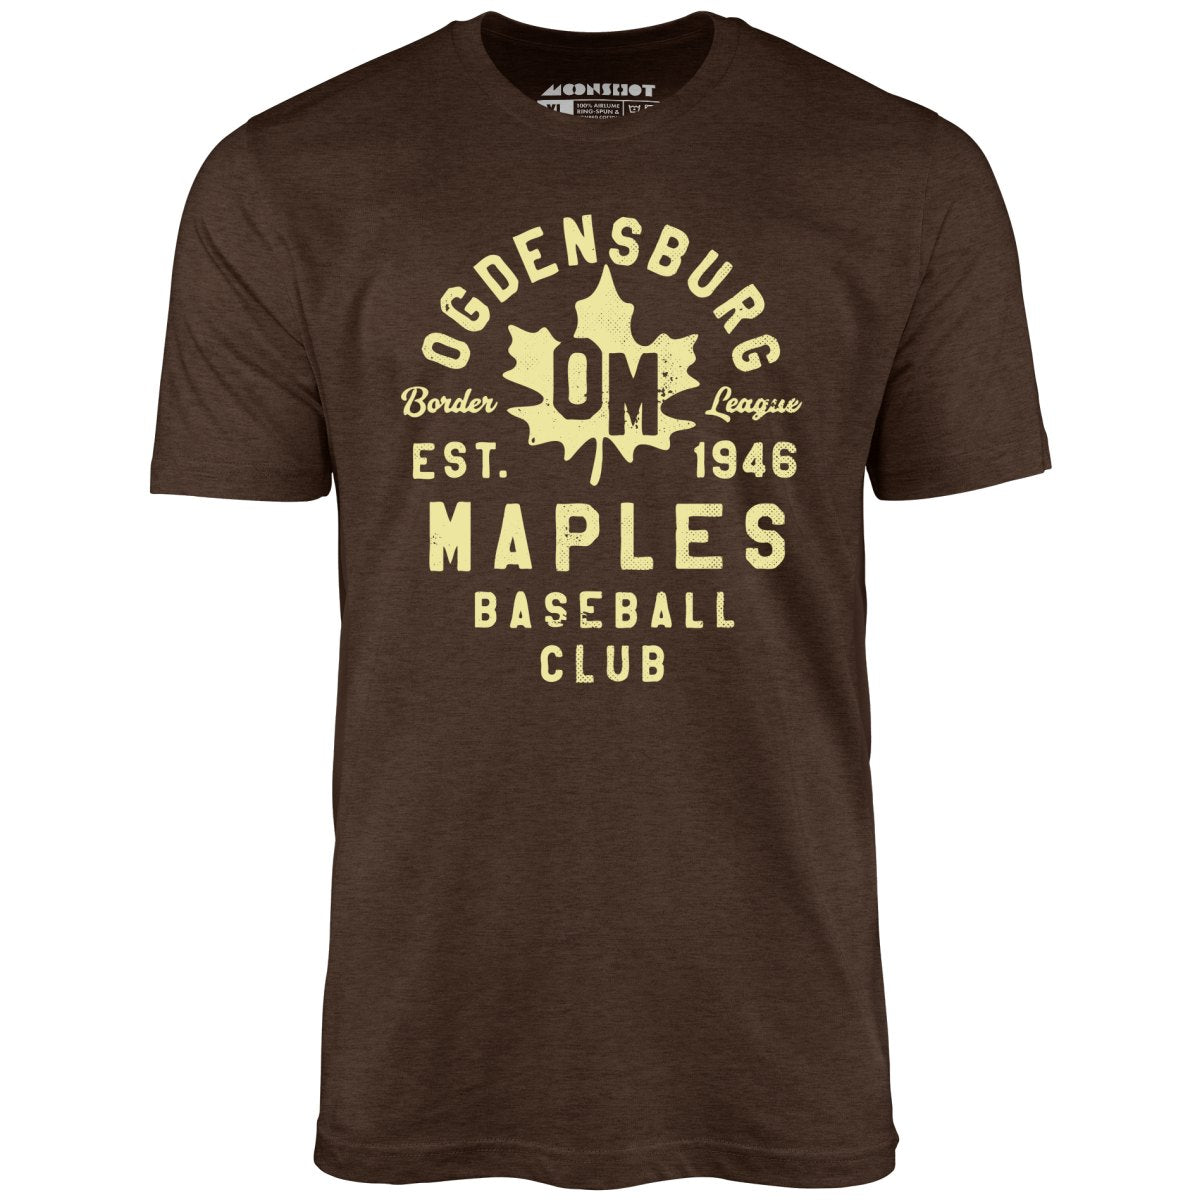 Ogdensburg Maples - New York - Vintage Defunct Baseball Teams - Unisex T-Shirt